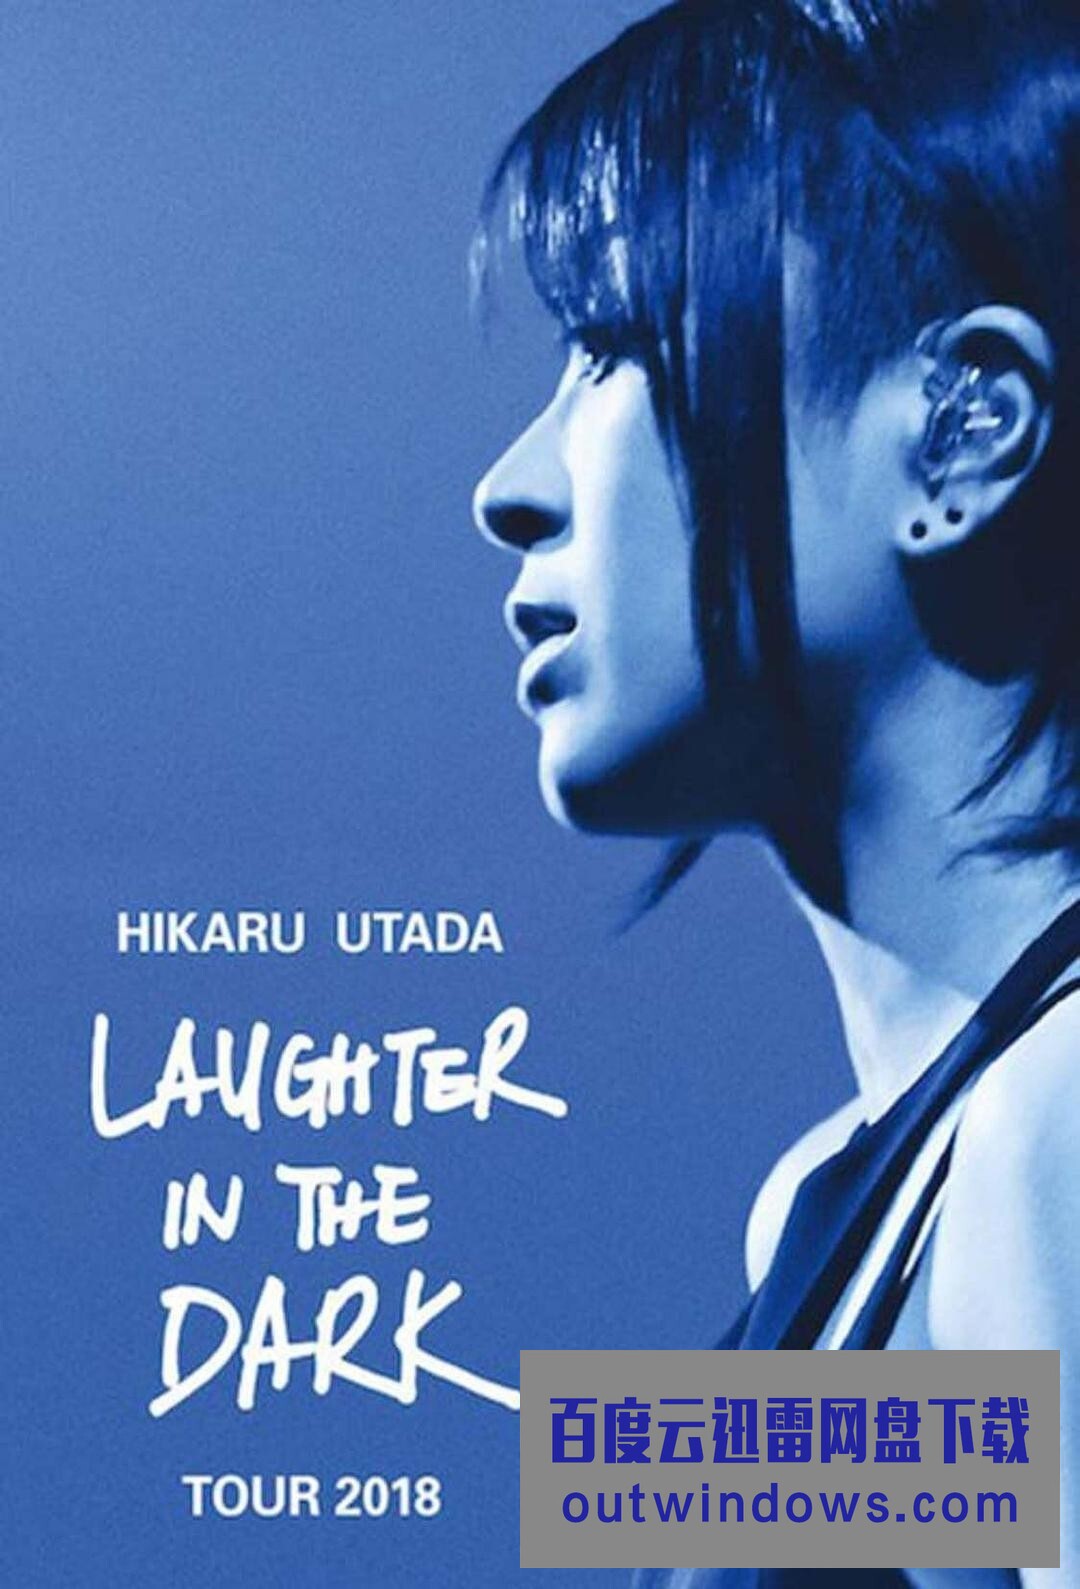 《宇多田光Laugher in the Dark 2018 巡回演唱会》1080p|4k高清